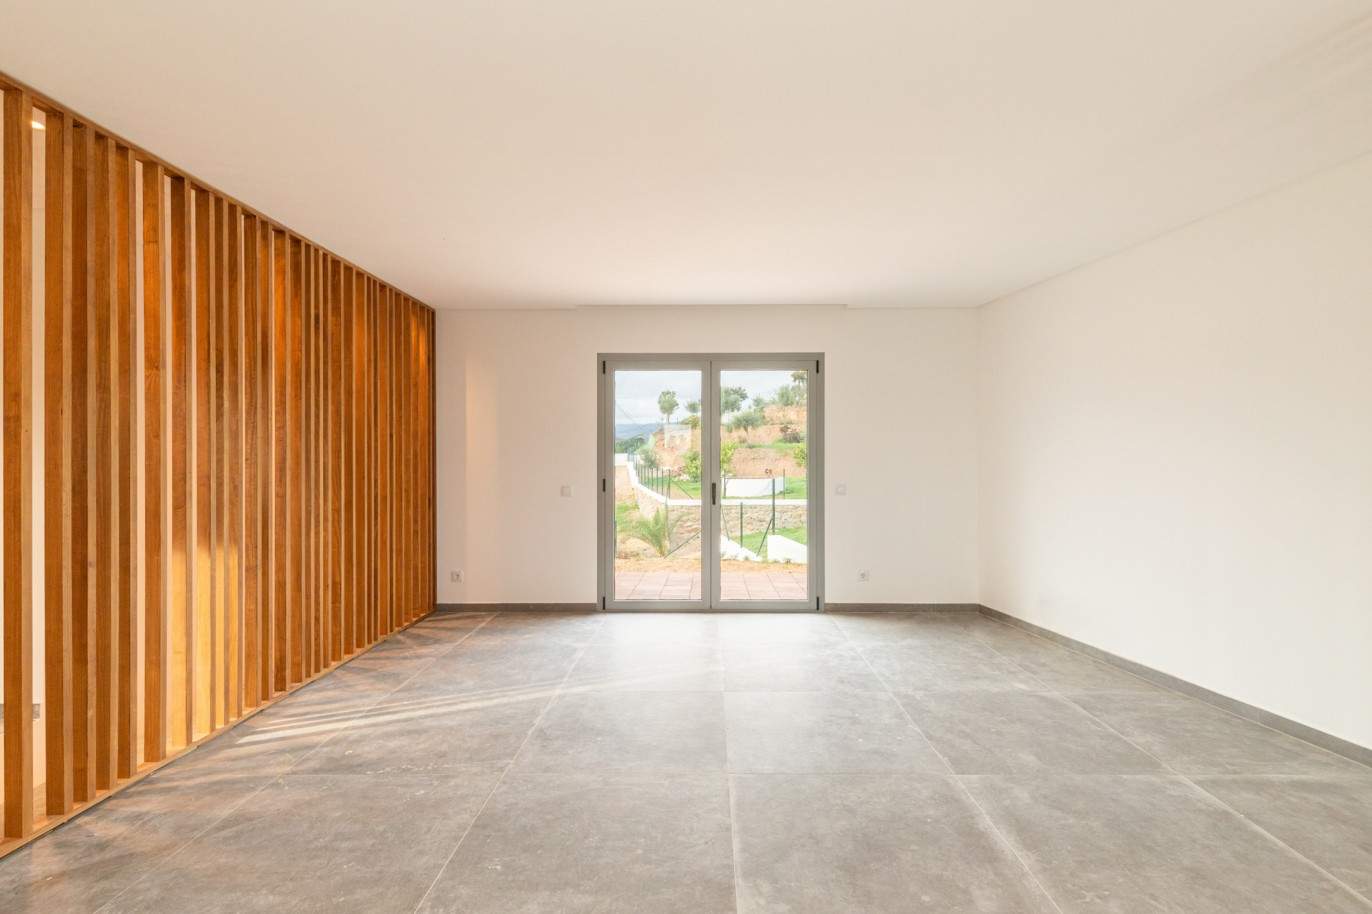 3 Bedroom Villa à vendre à Portimao, Algarve_211002